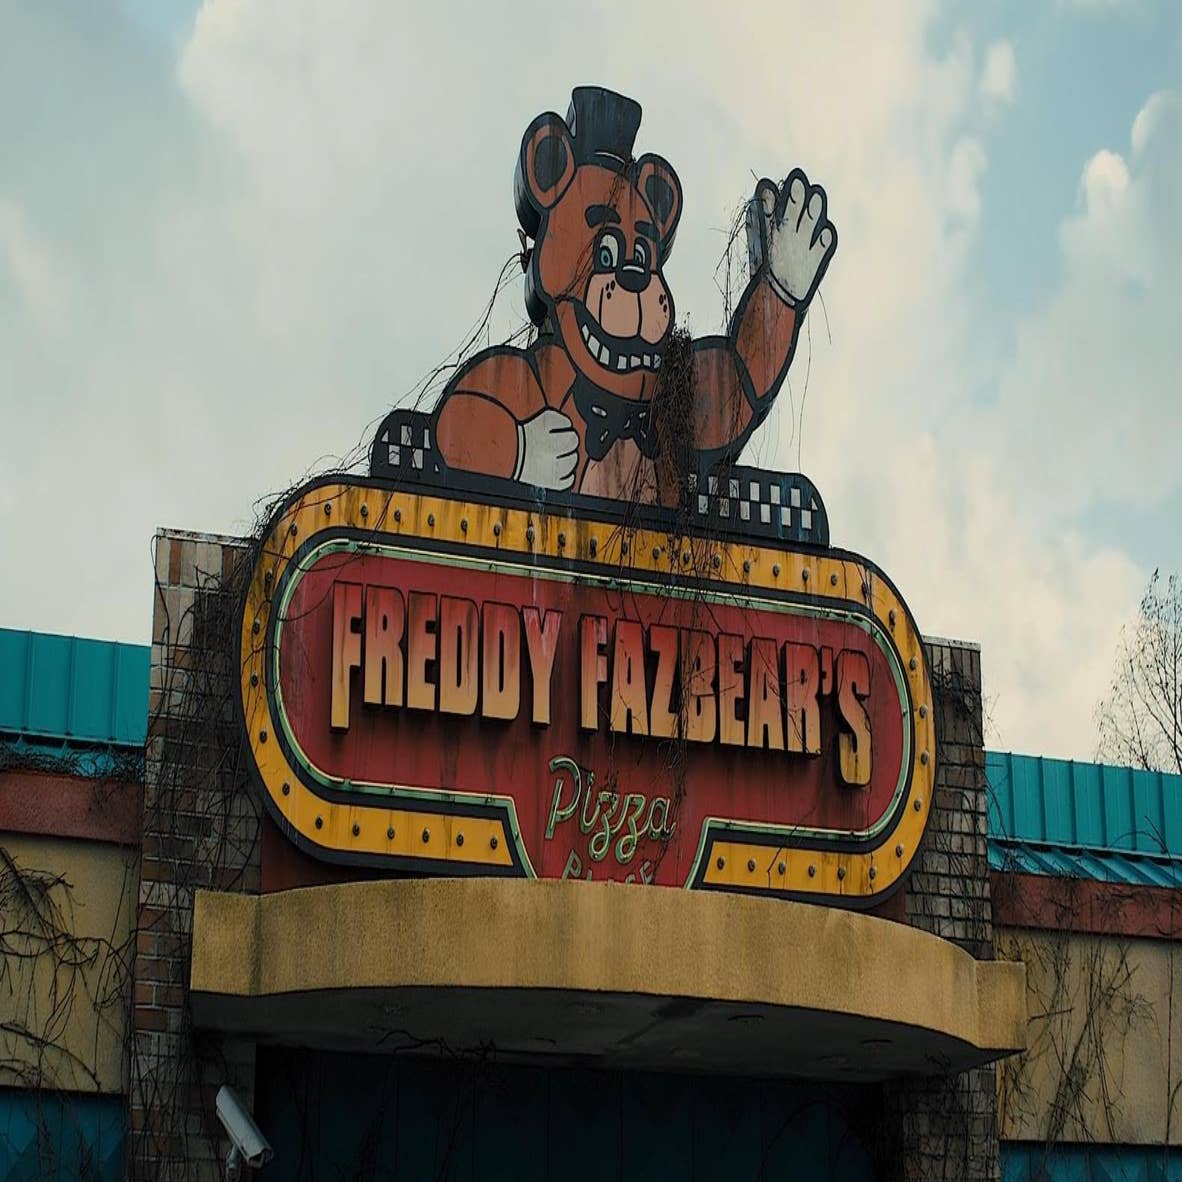 i finally did it.  Five Nights At Freddy's (FNAF) Part 1 